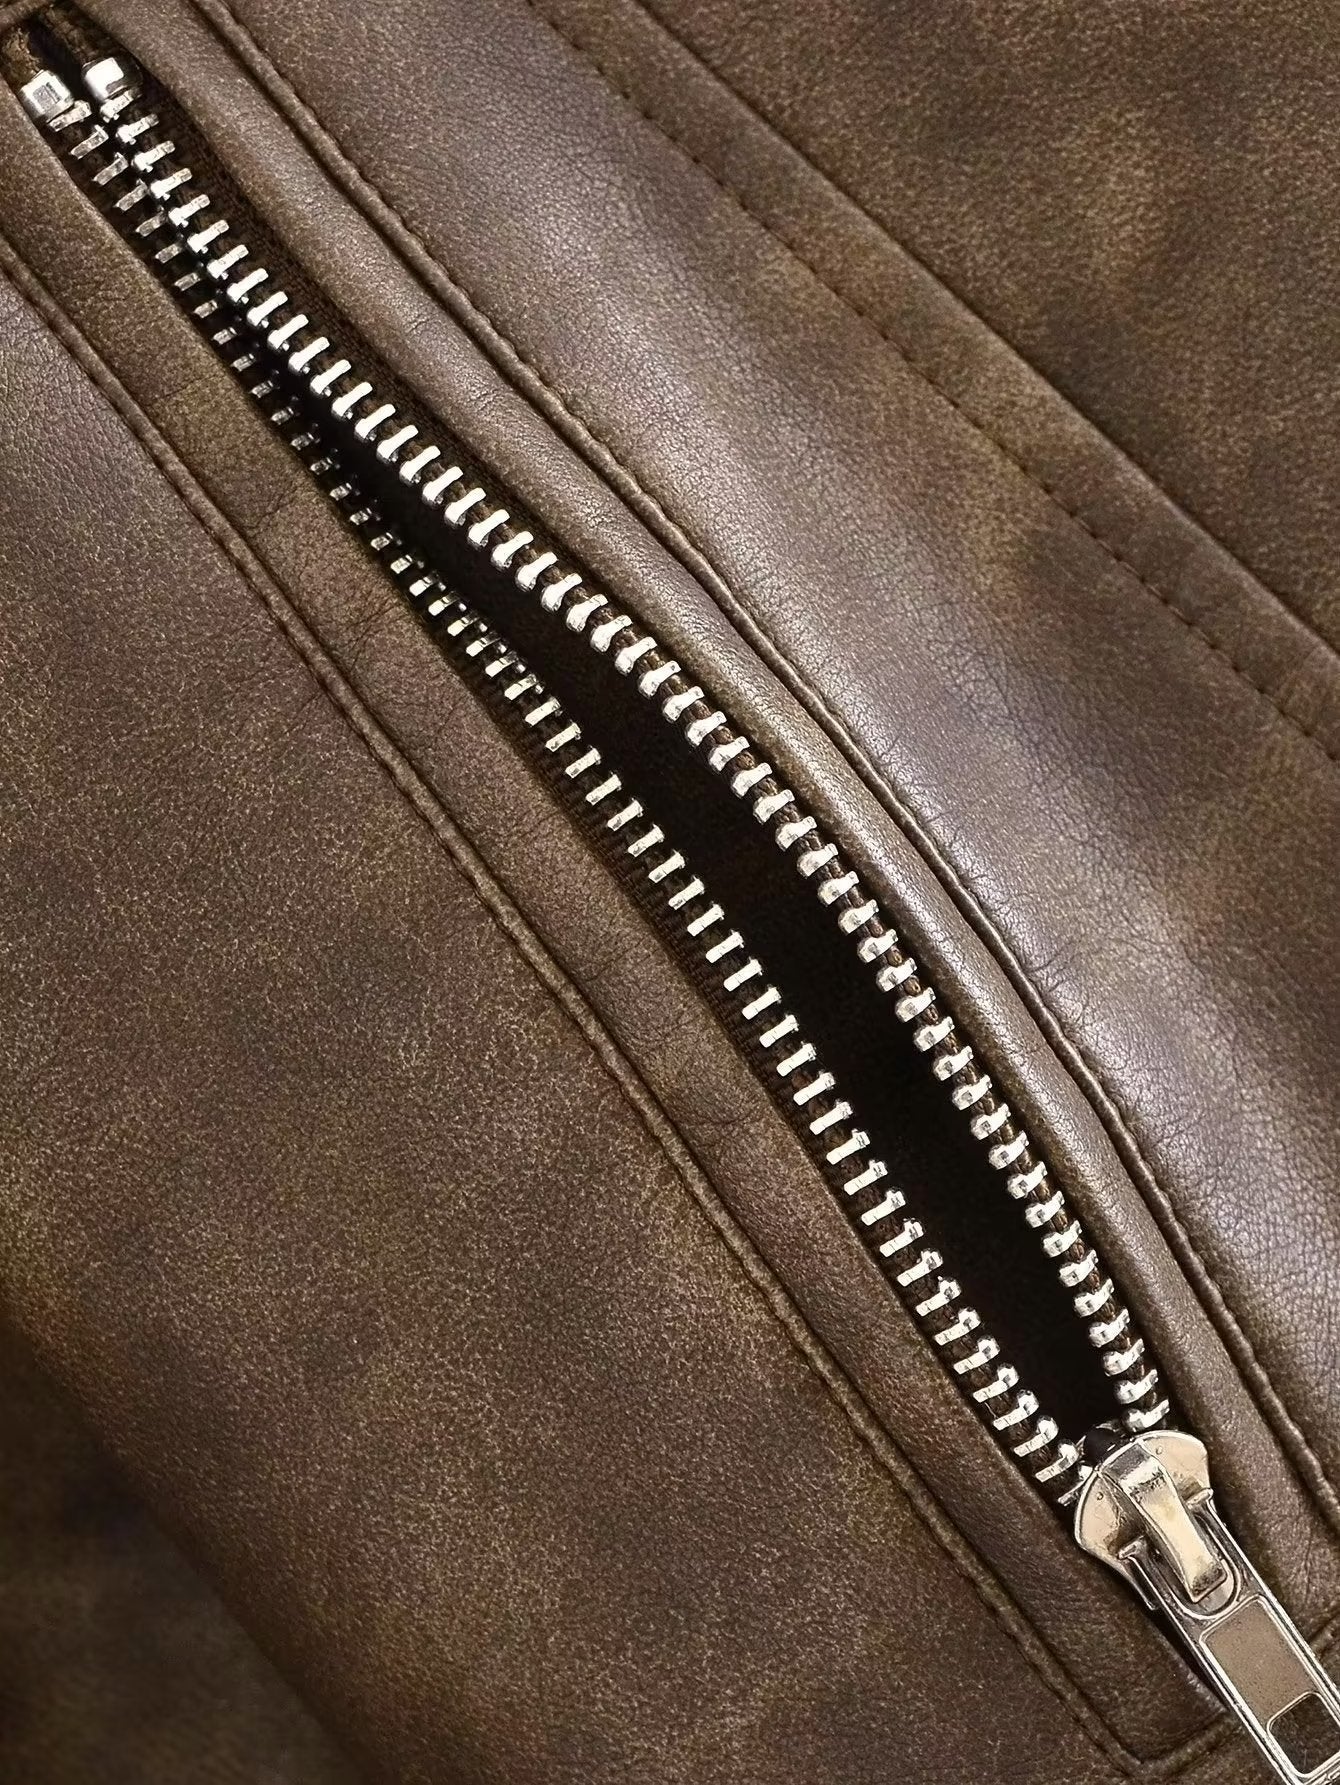 Women's Short Leather Jacket